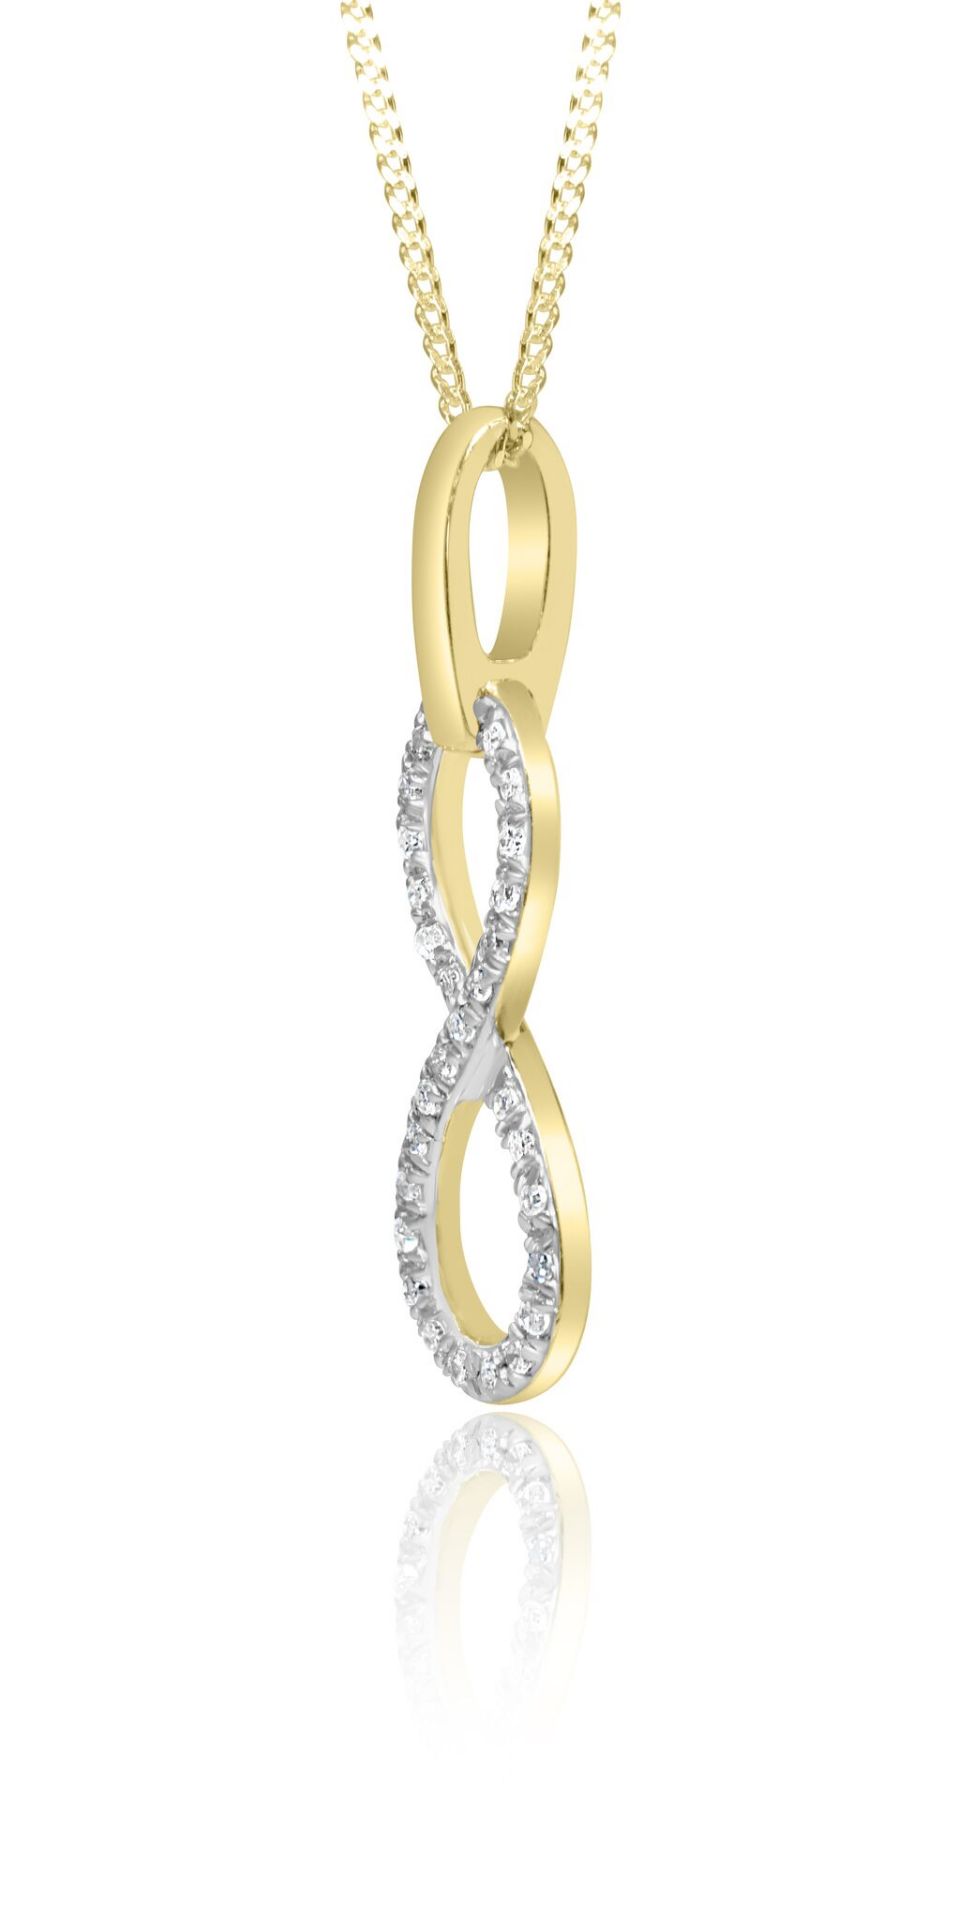 9ct Yellow Gold Diamond Infinity Pendant - Image 2 of 3